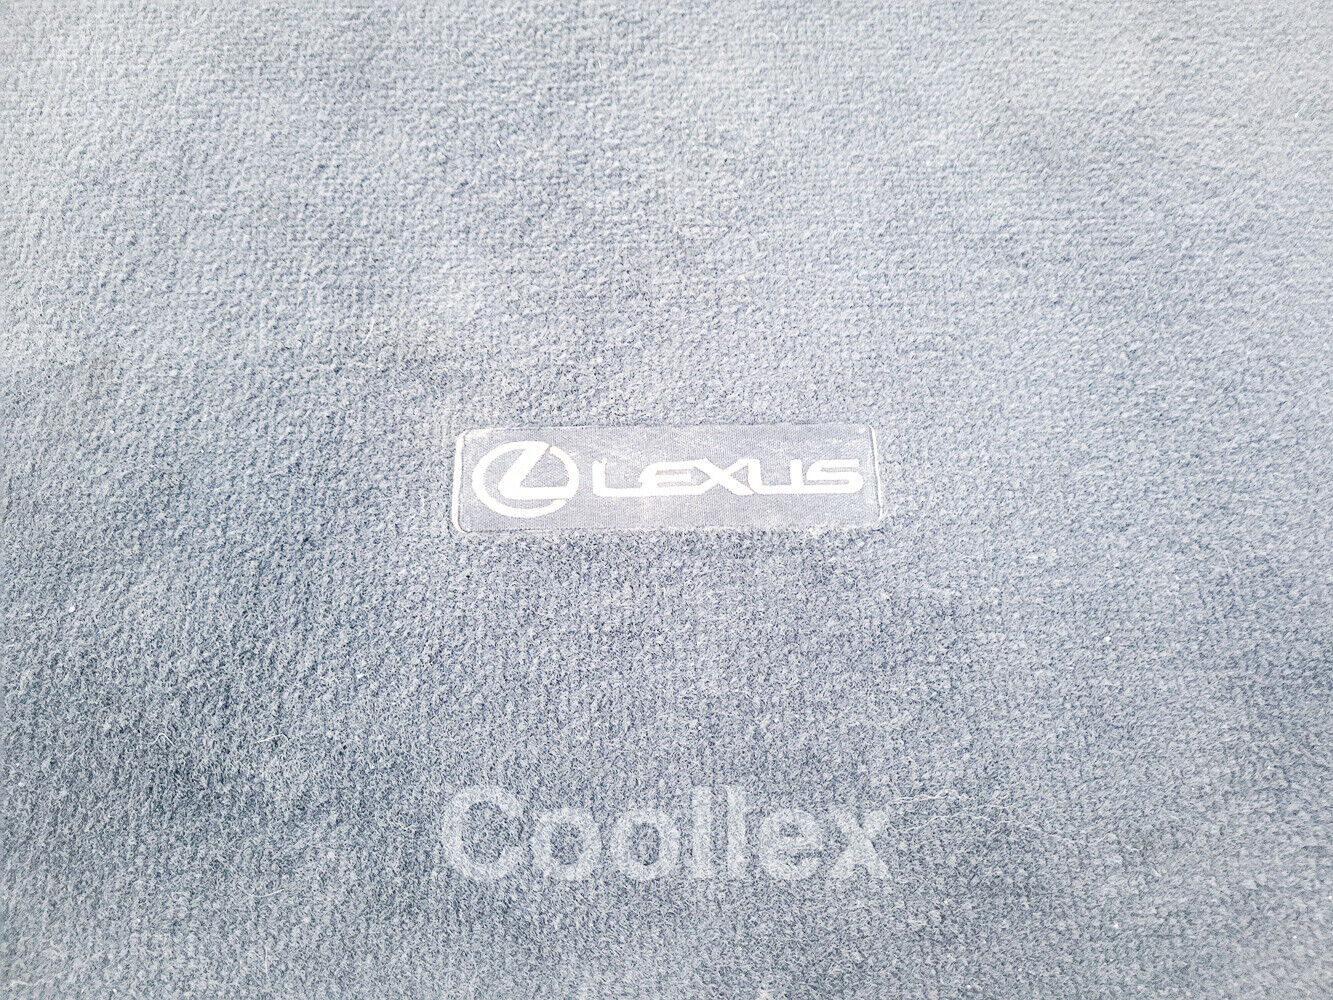 06-13 Lexus Is250 Is350 Awd Rear Trunk Floor Carpet Mat PT208-53061 Oem